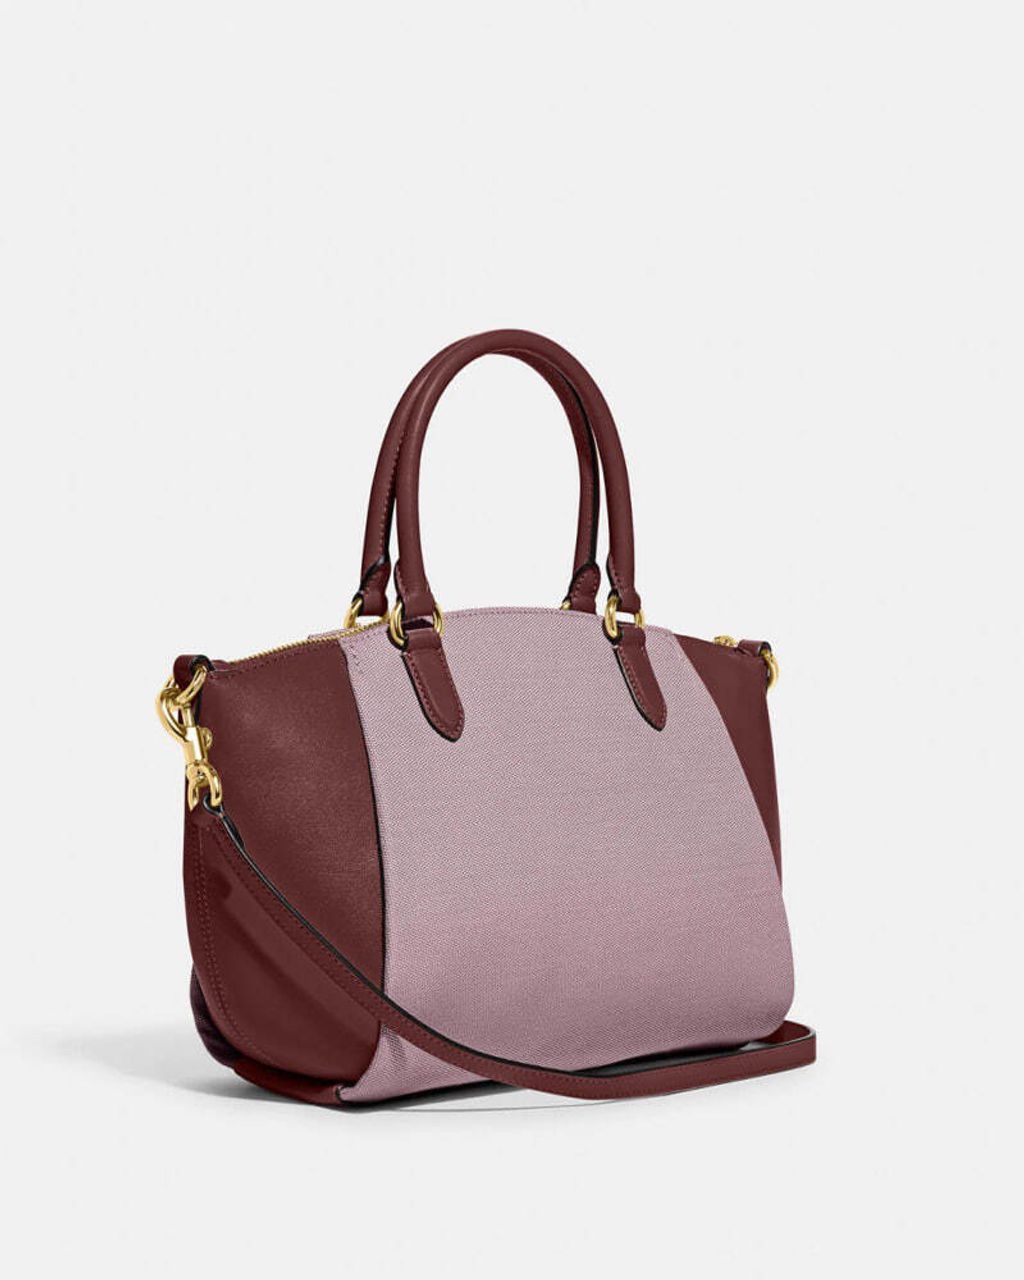 handbag branded coach outlet personalshopper usa malaysia ready stock  COACH ELISE SATCHEL 1